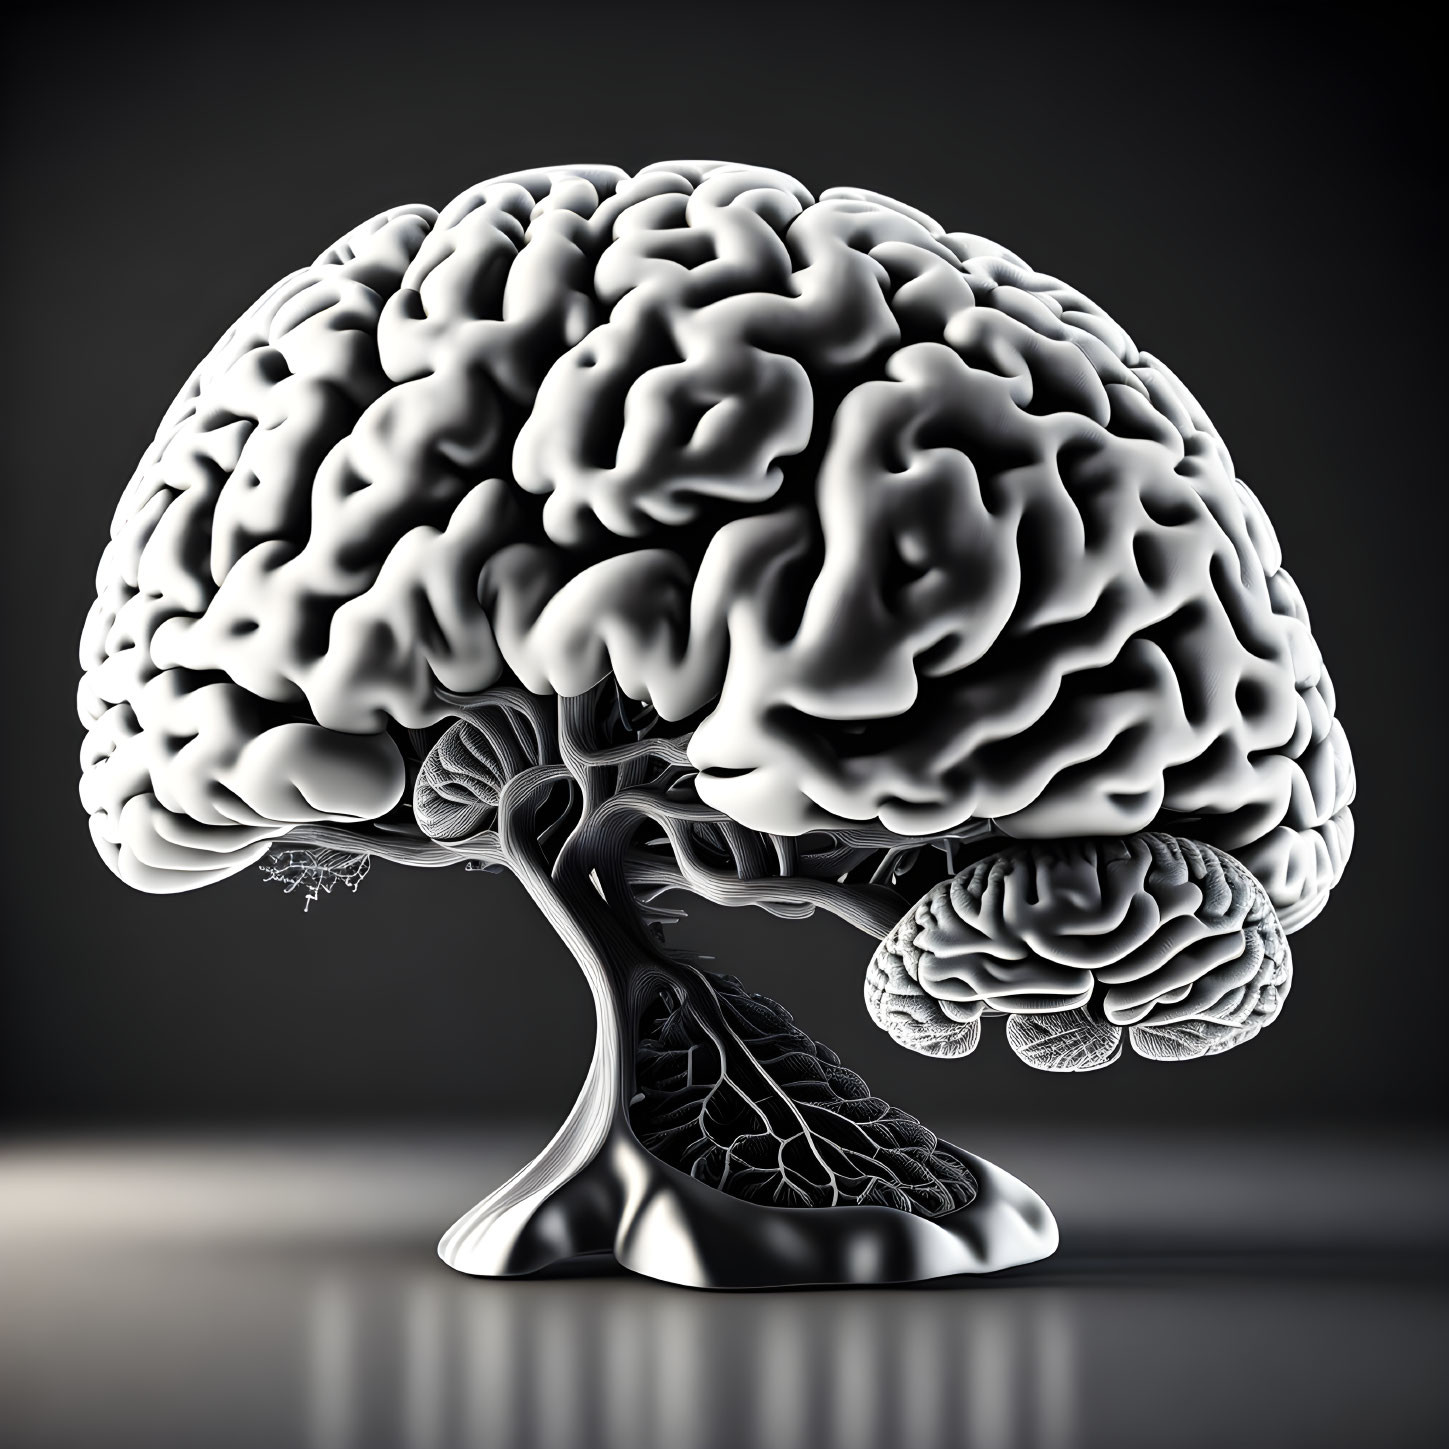 Detailed 3D Rendering of Human Brain on Dark Background